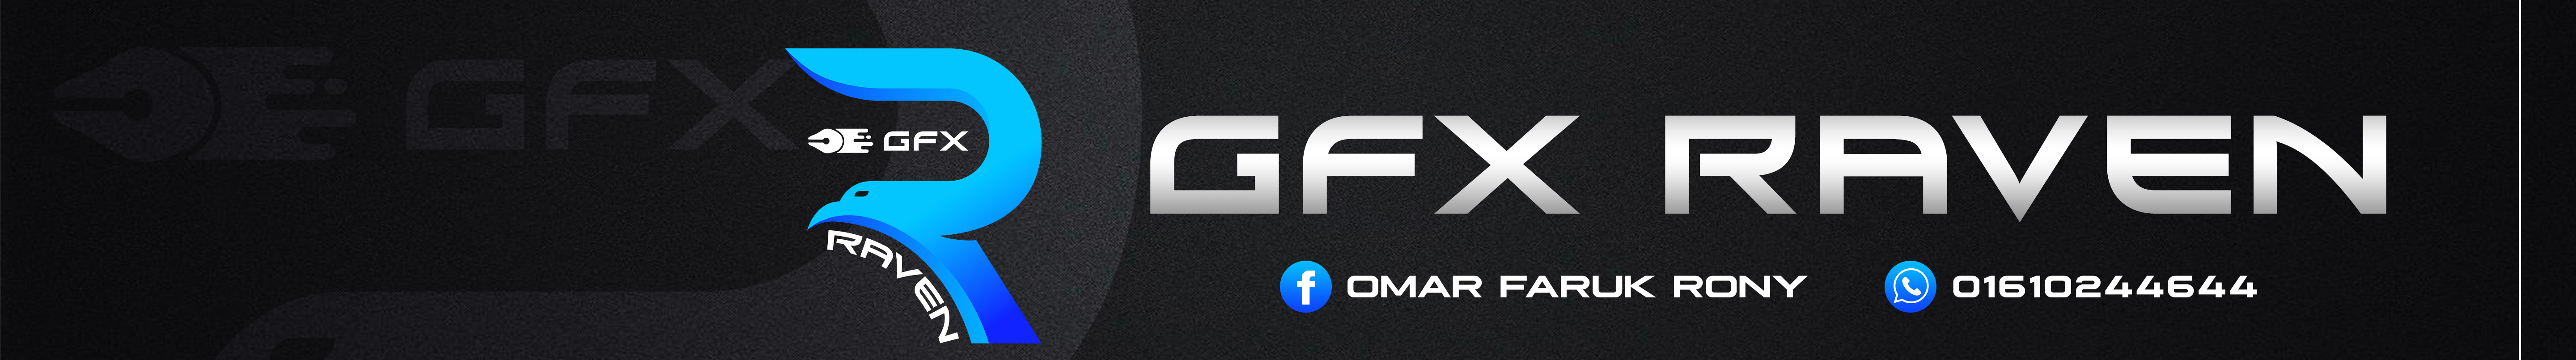 GFX RAVEN's profile banner